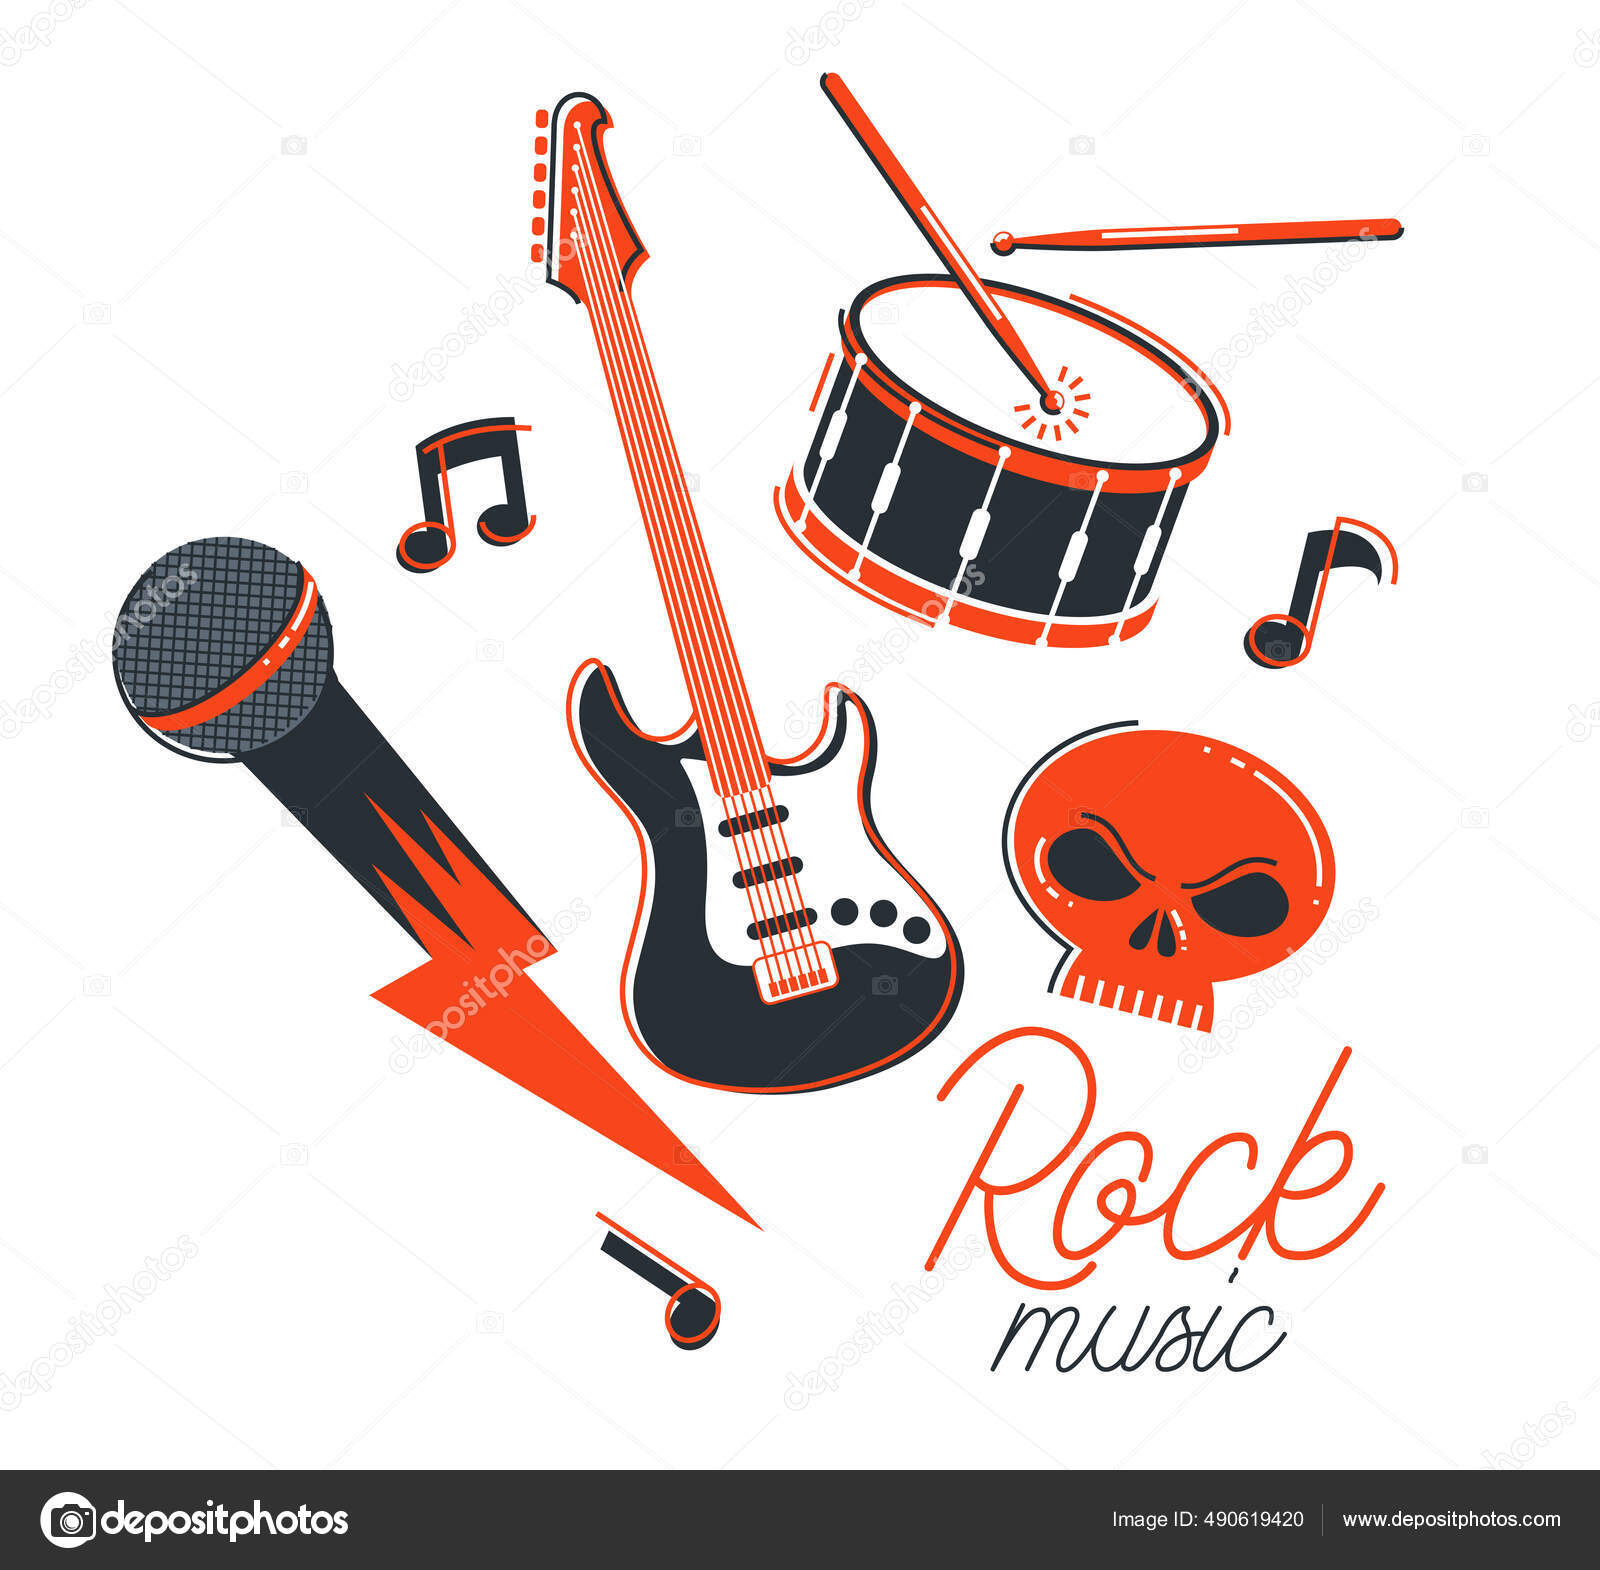 https://st2.depositphotos.com/1030956/49061/v/1600/depositphotos_490619420-stock-illustration-rock-music-band-vector-flat.jpg